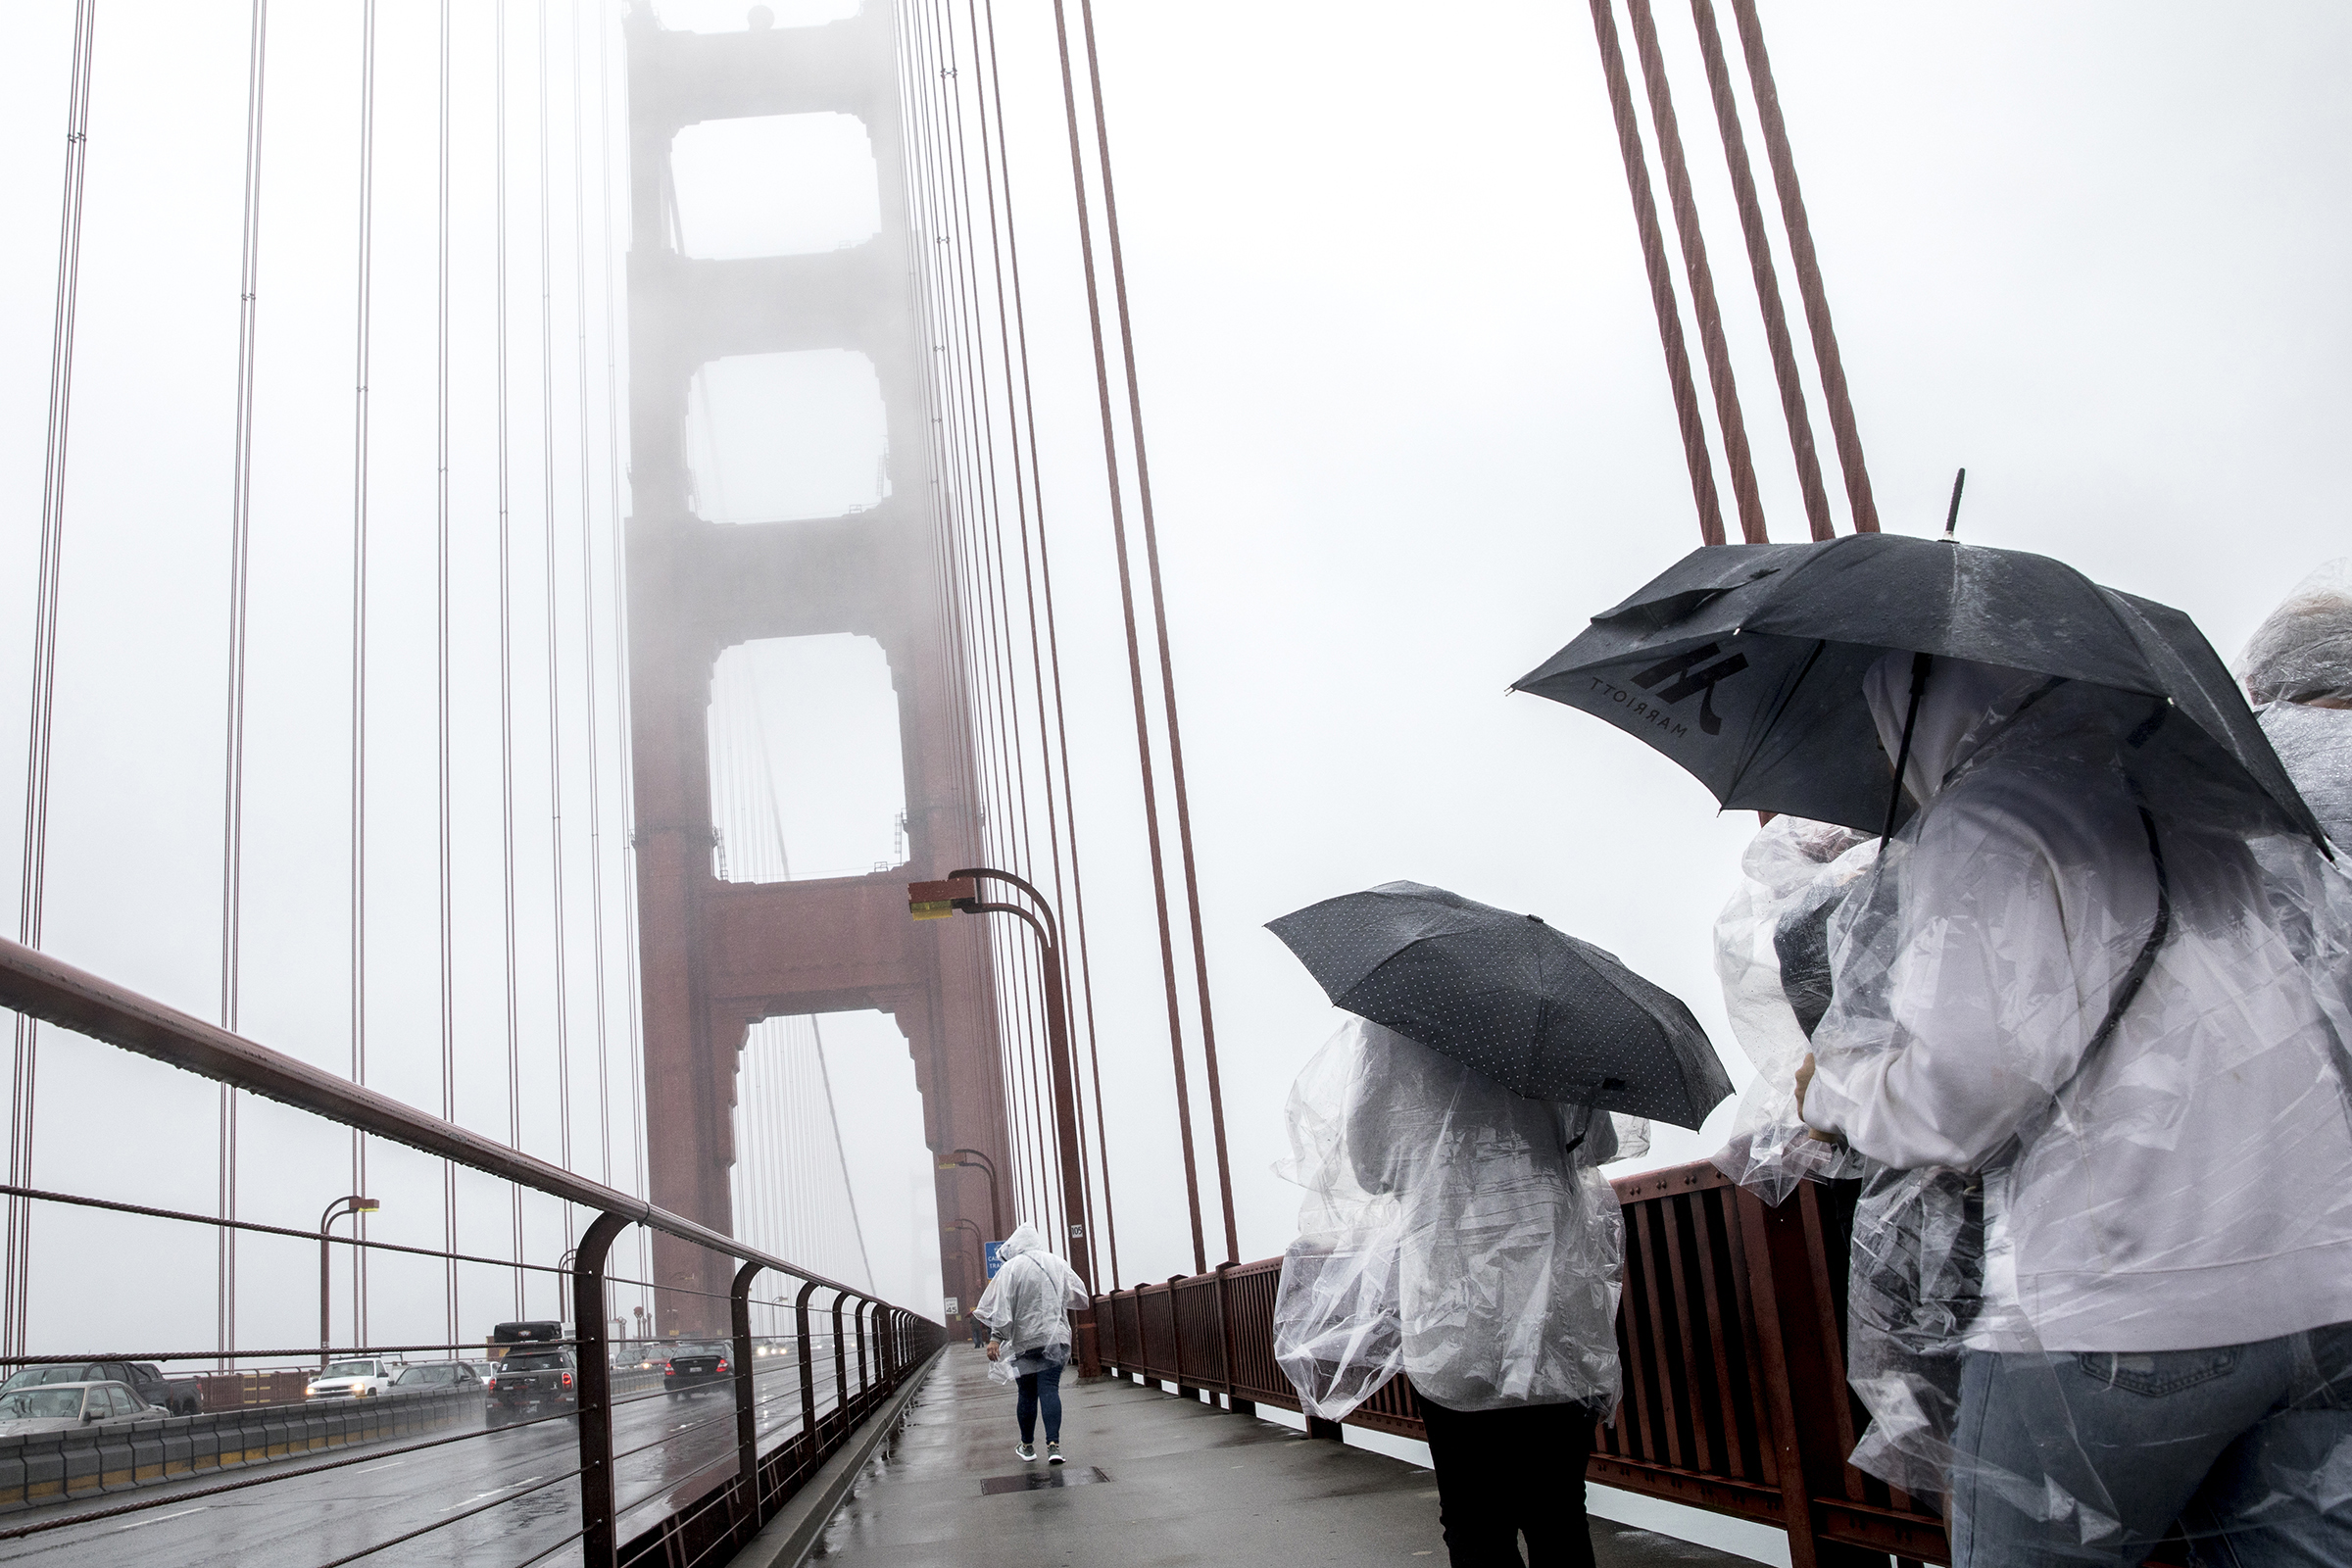 Pedestrians wearing clear ponchos and holding black umbrellas walk through the rain across the Golden Gate Bridge.